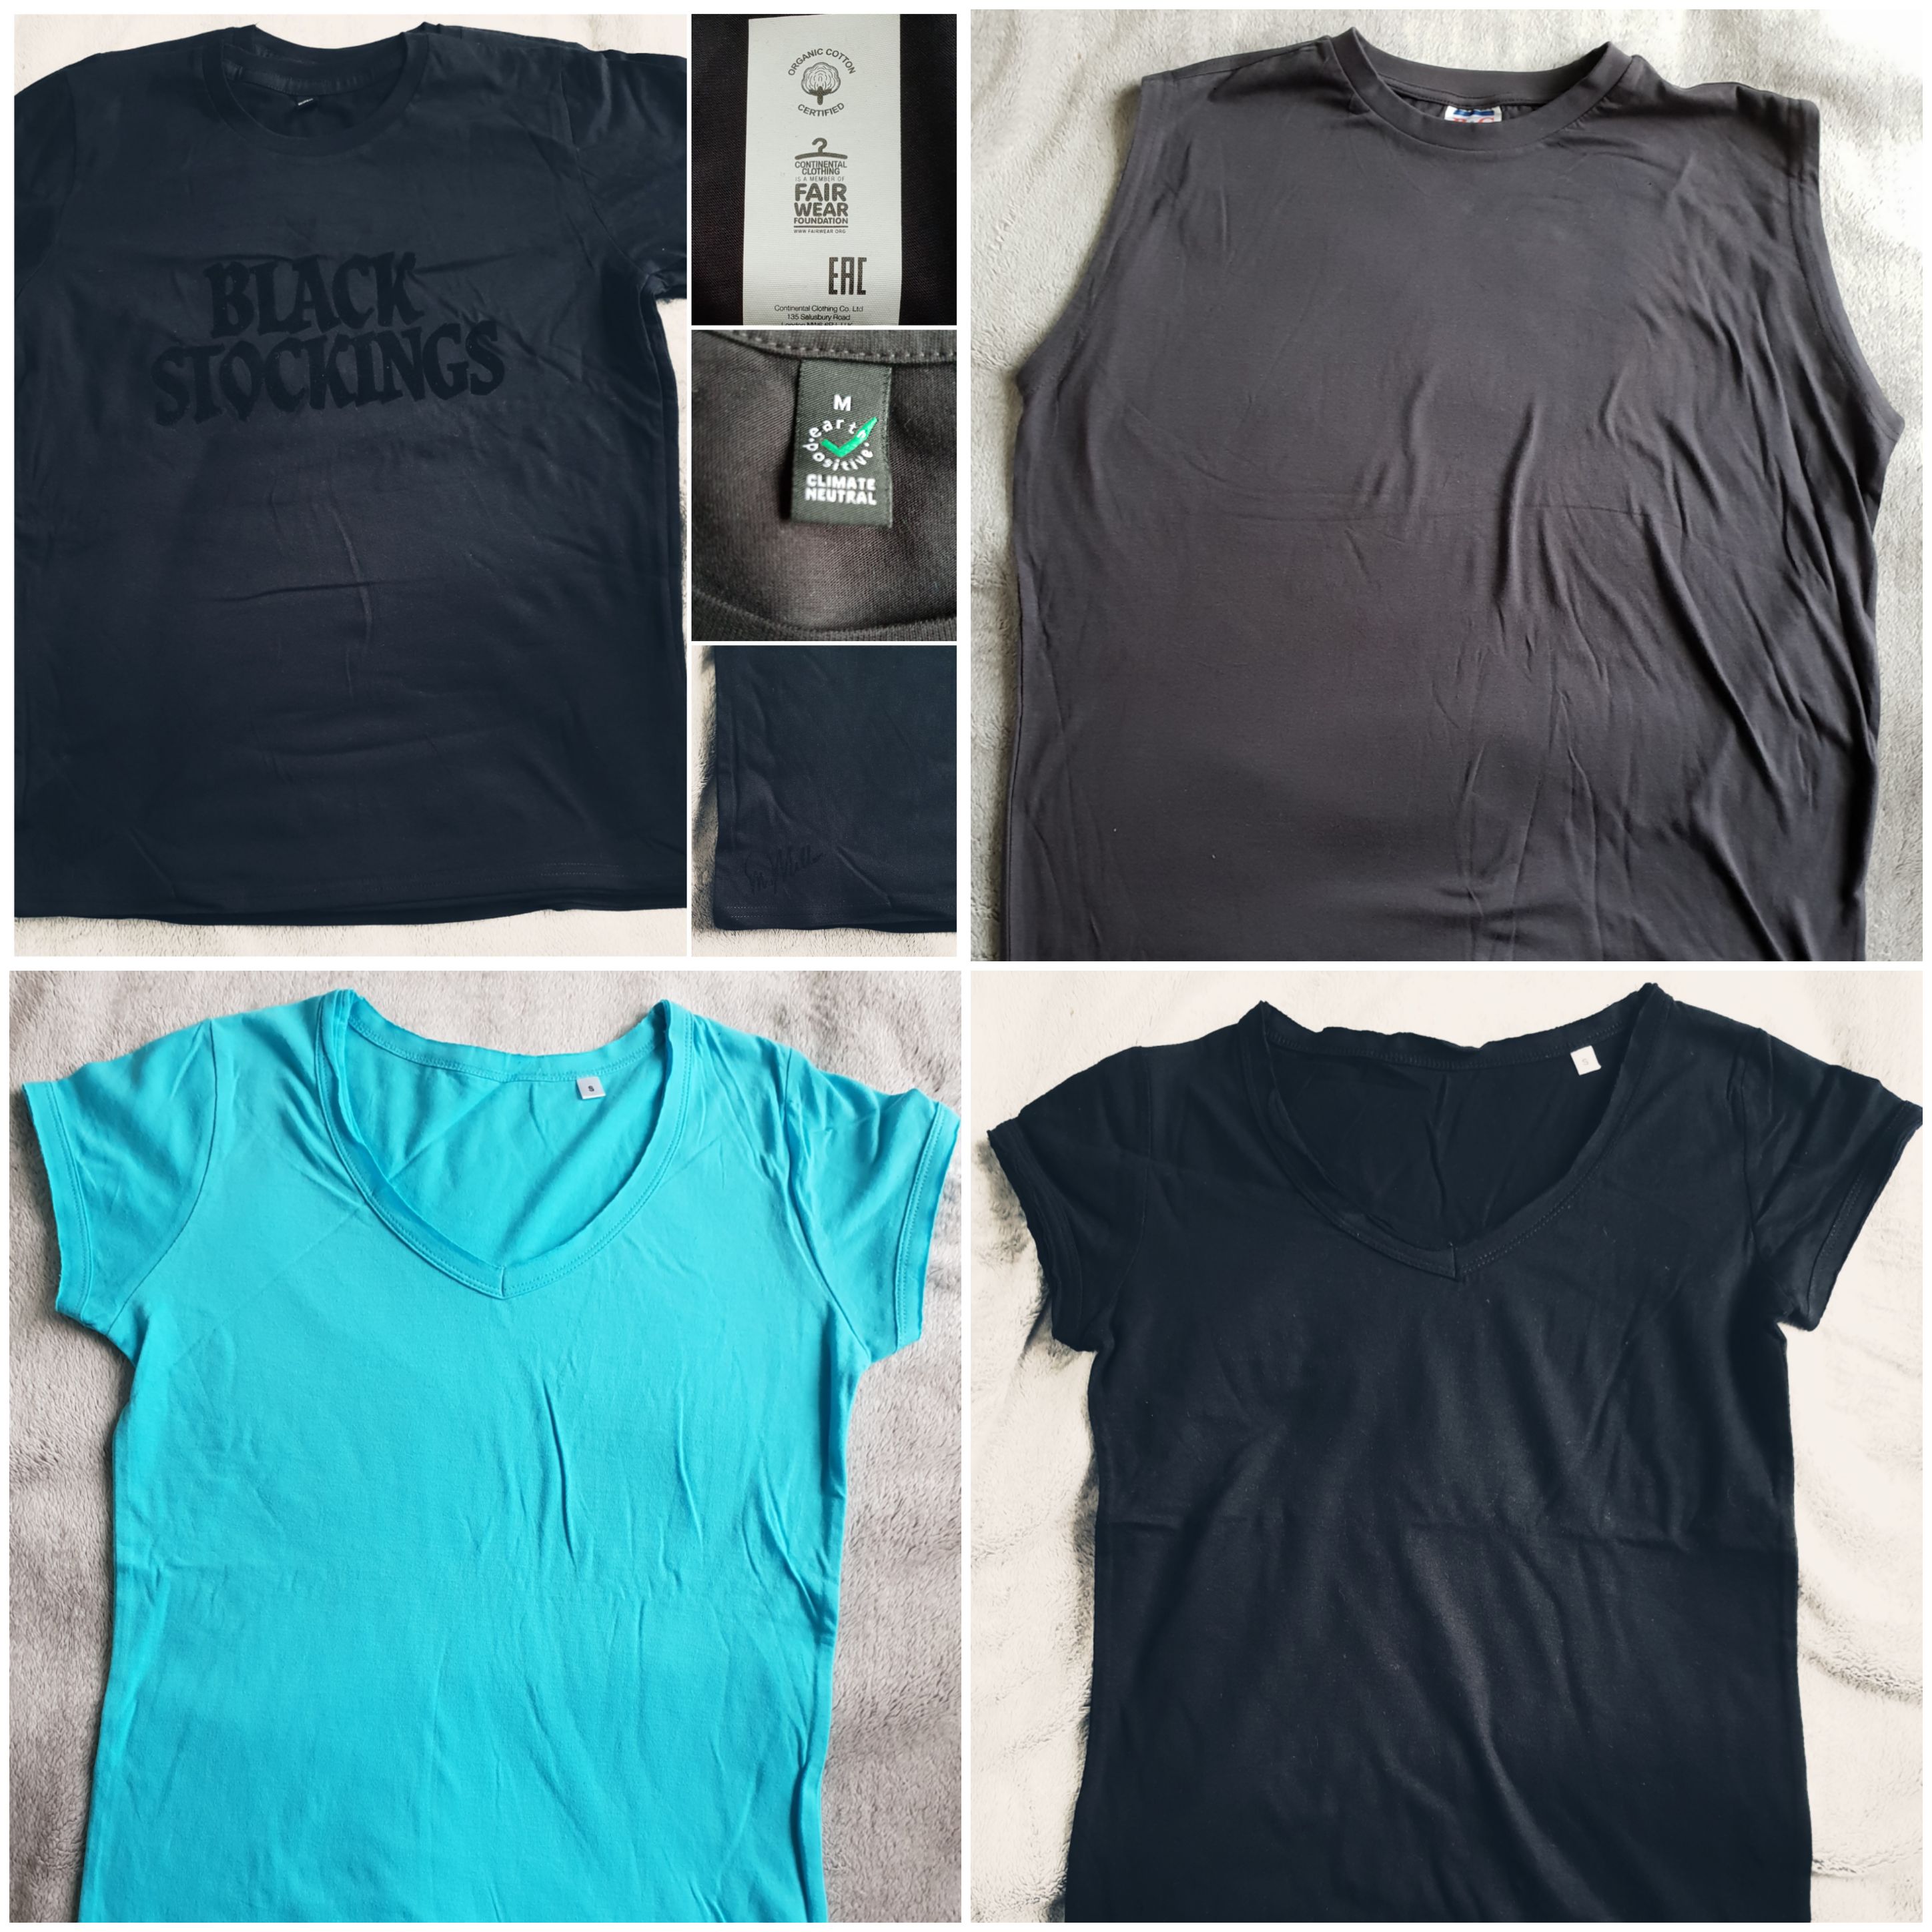 Mens T-Shirts Lot (1) of 46 Pieces 100% Cotton Branded XS S M L XL